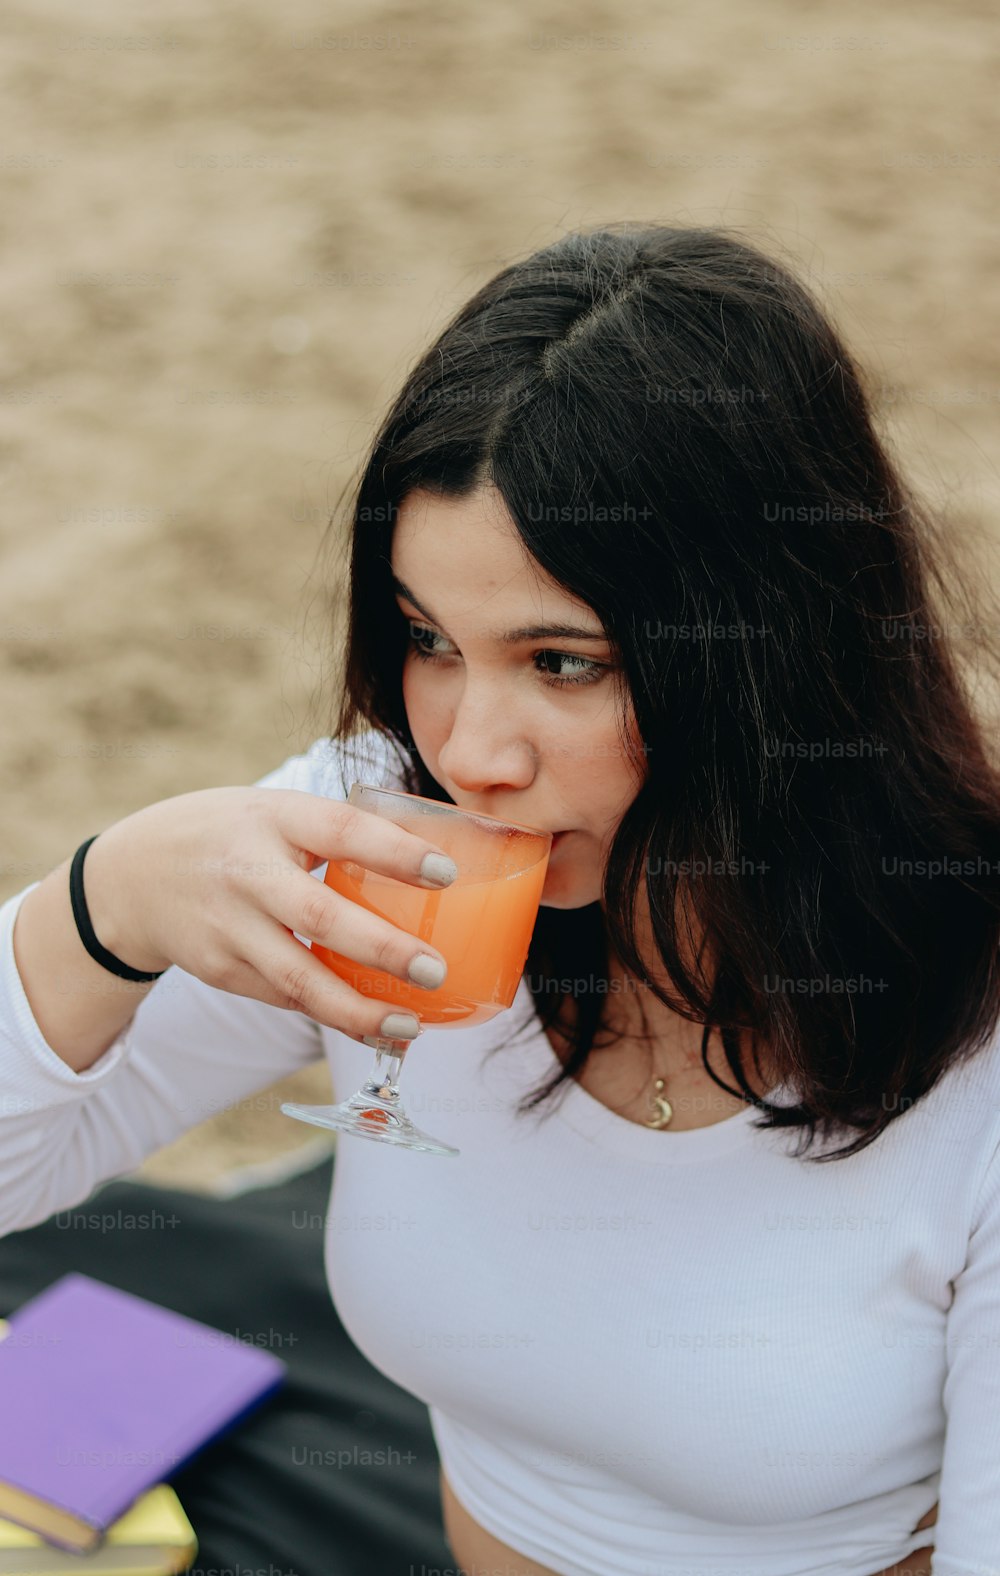 Una donna in camicia bianca che beve un drink